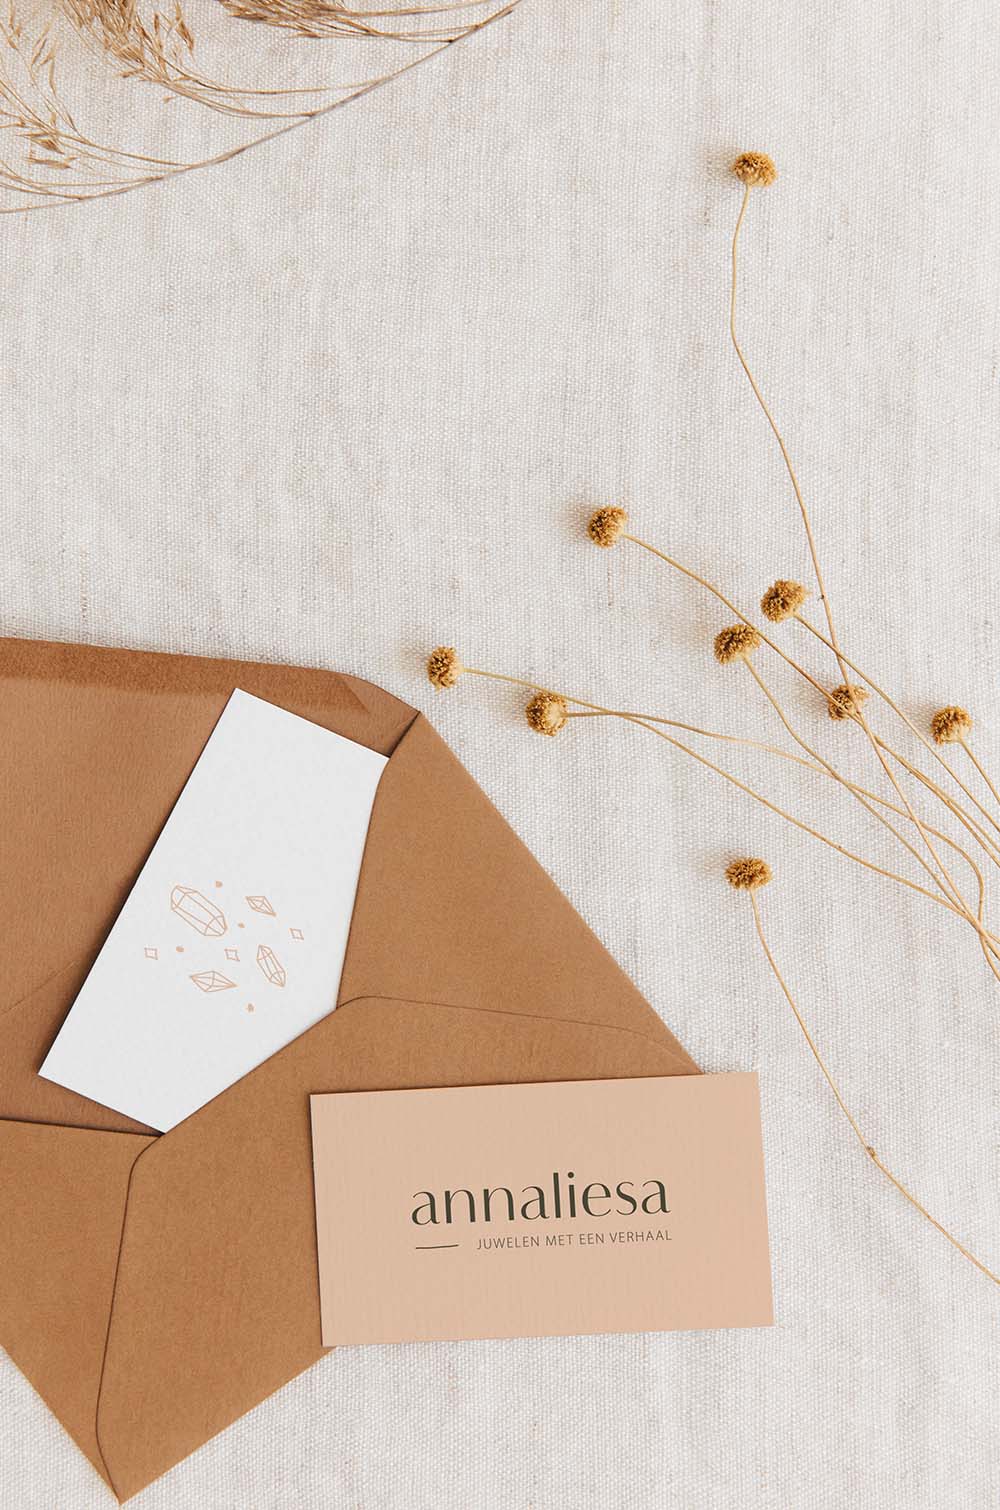 Rebranding Annaliesa